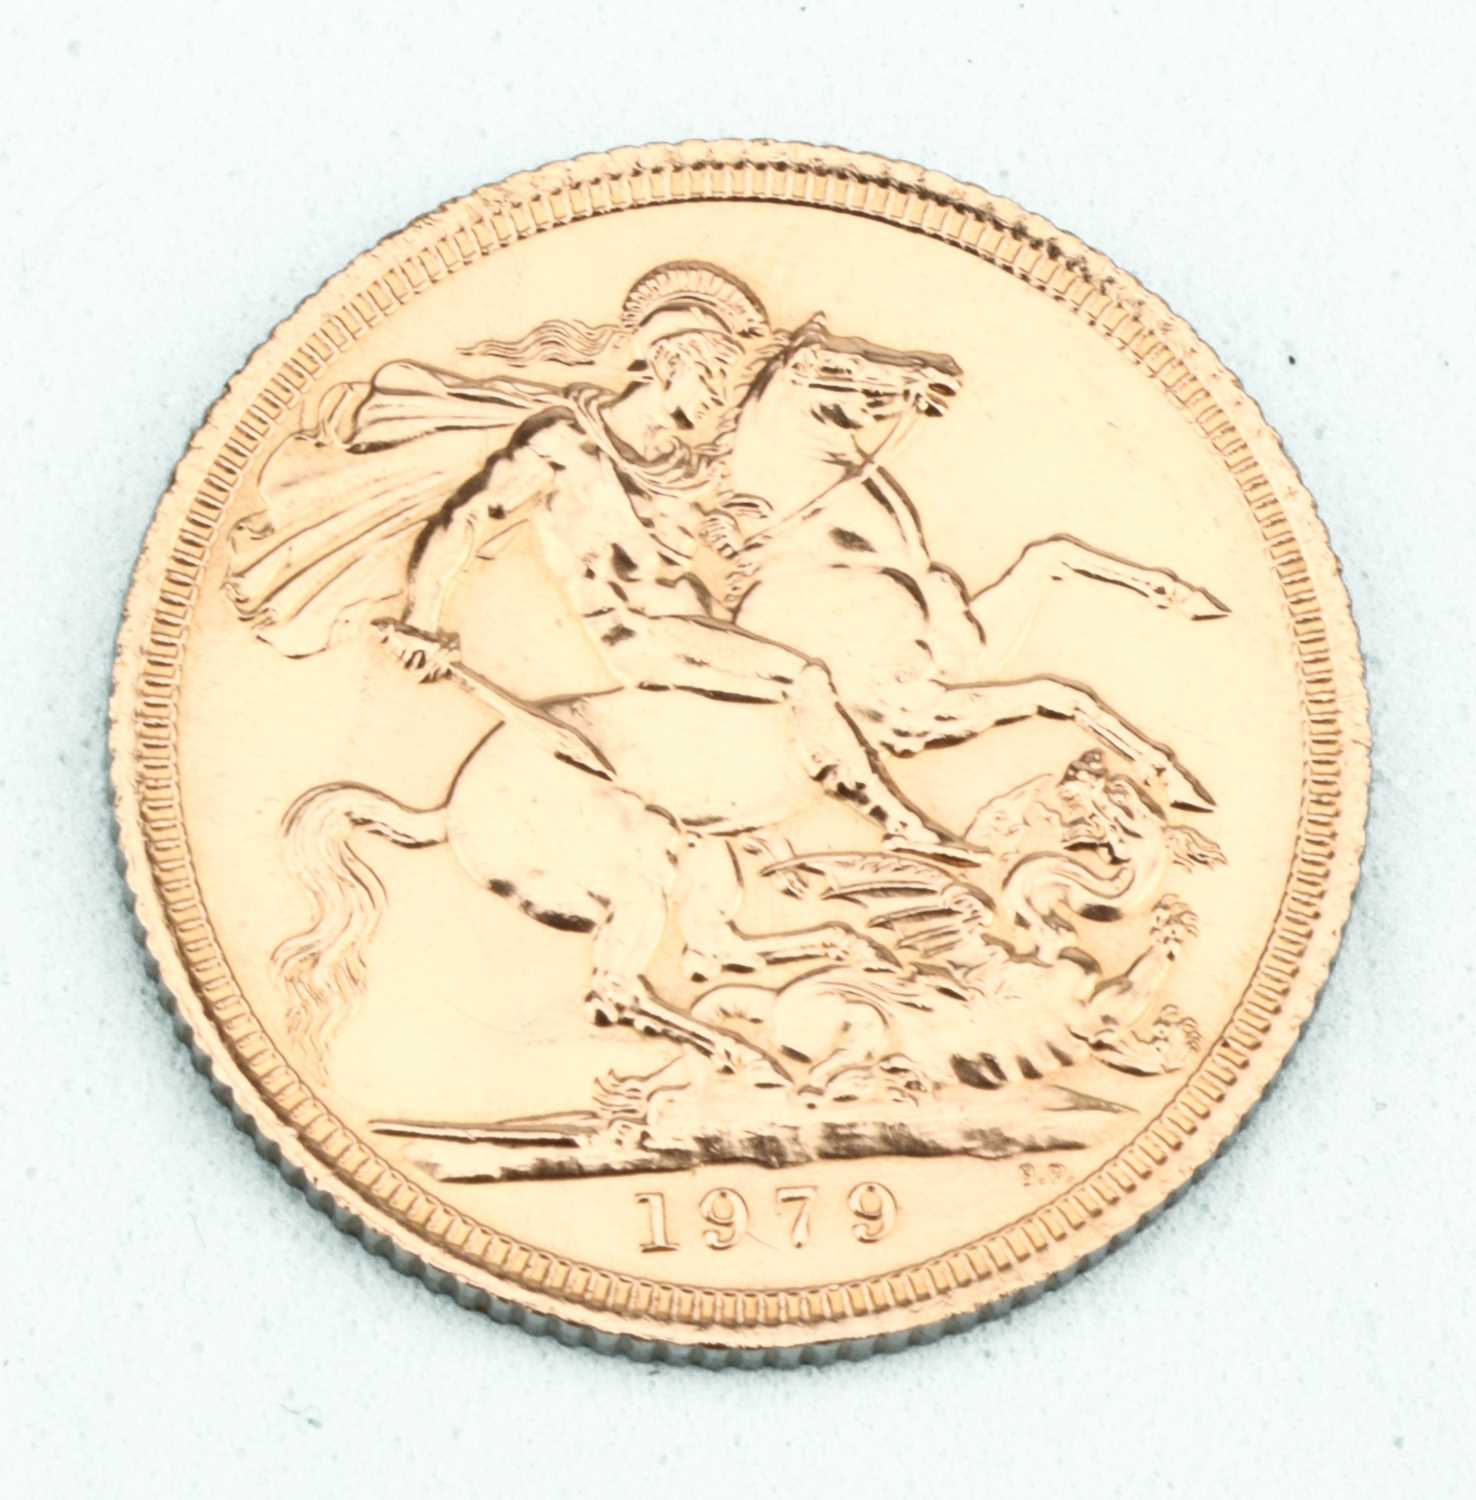 Lot 104 - An Elizabeth II Gold Sovereign Coin